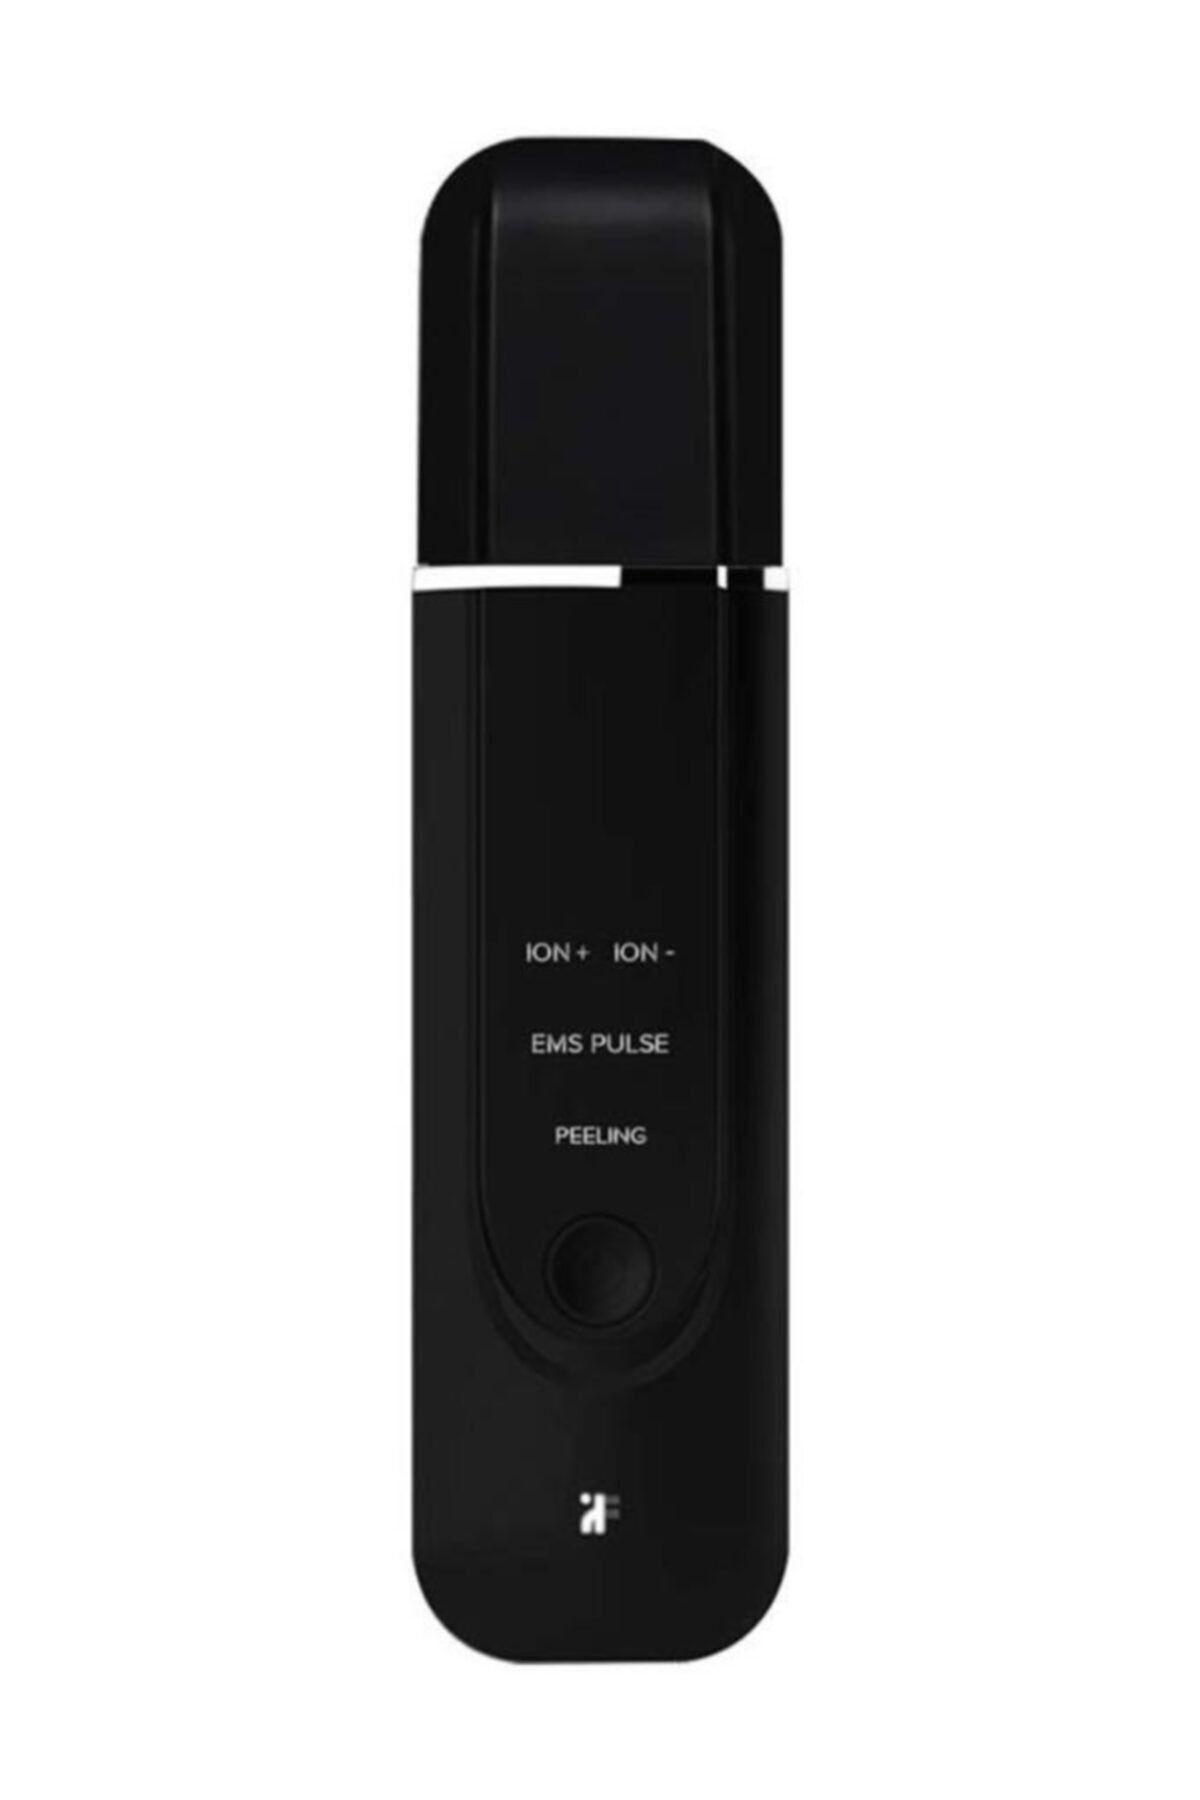 inFace Ms7100 Ultrasonic Yüz Temizleme Cihazı Siyah (Distribütör Garantili)